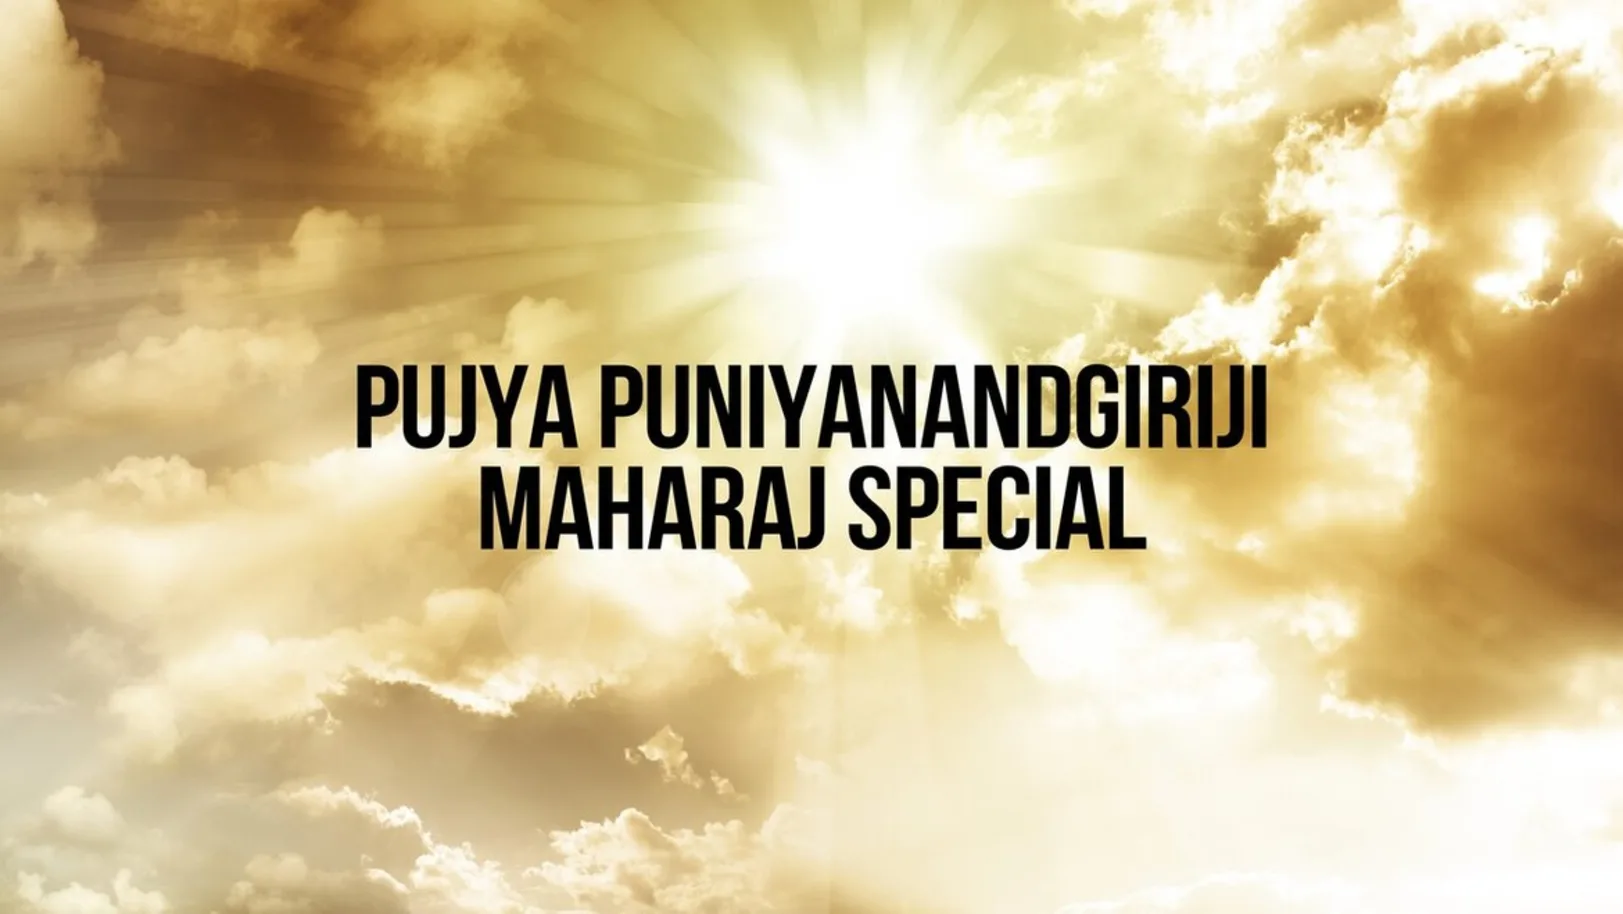 Pujya Puniyanandgiriji Maharaj Special Streaming Now On Aastha Bhajan